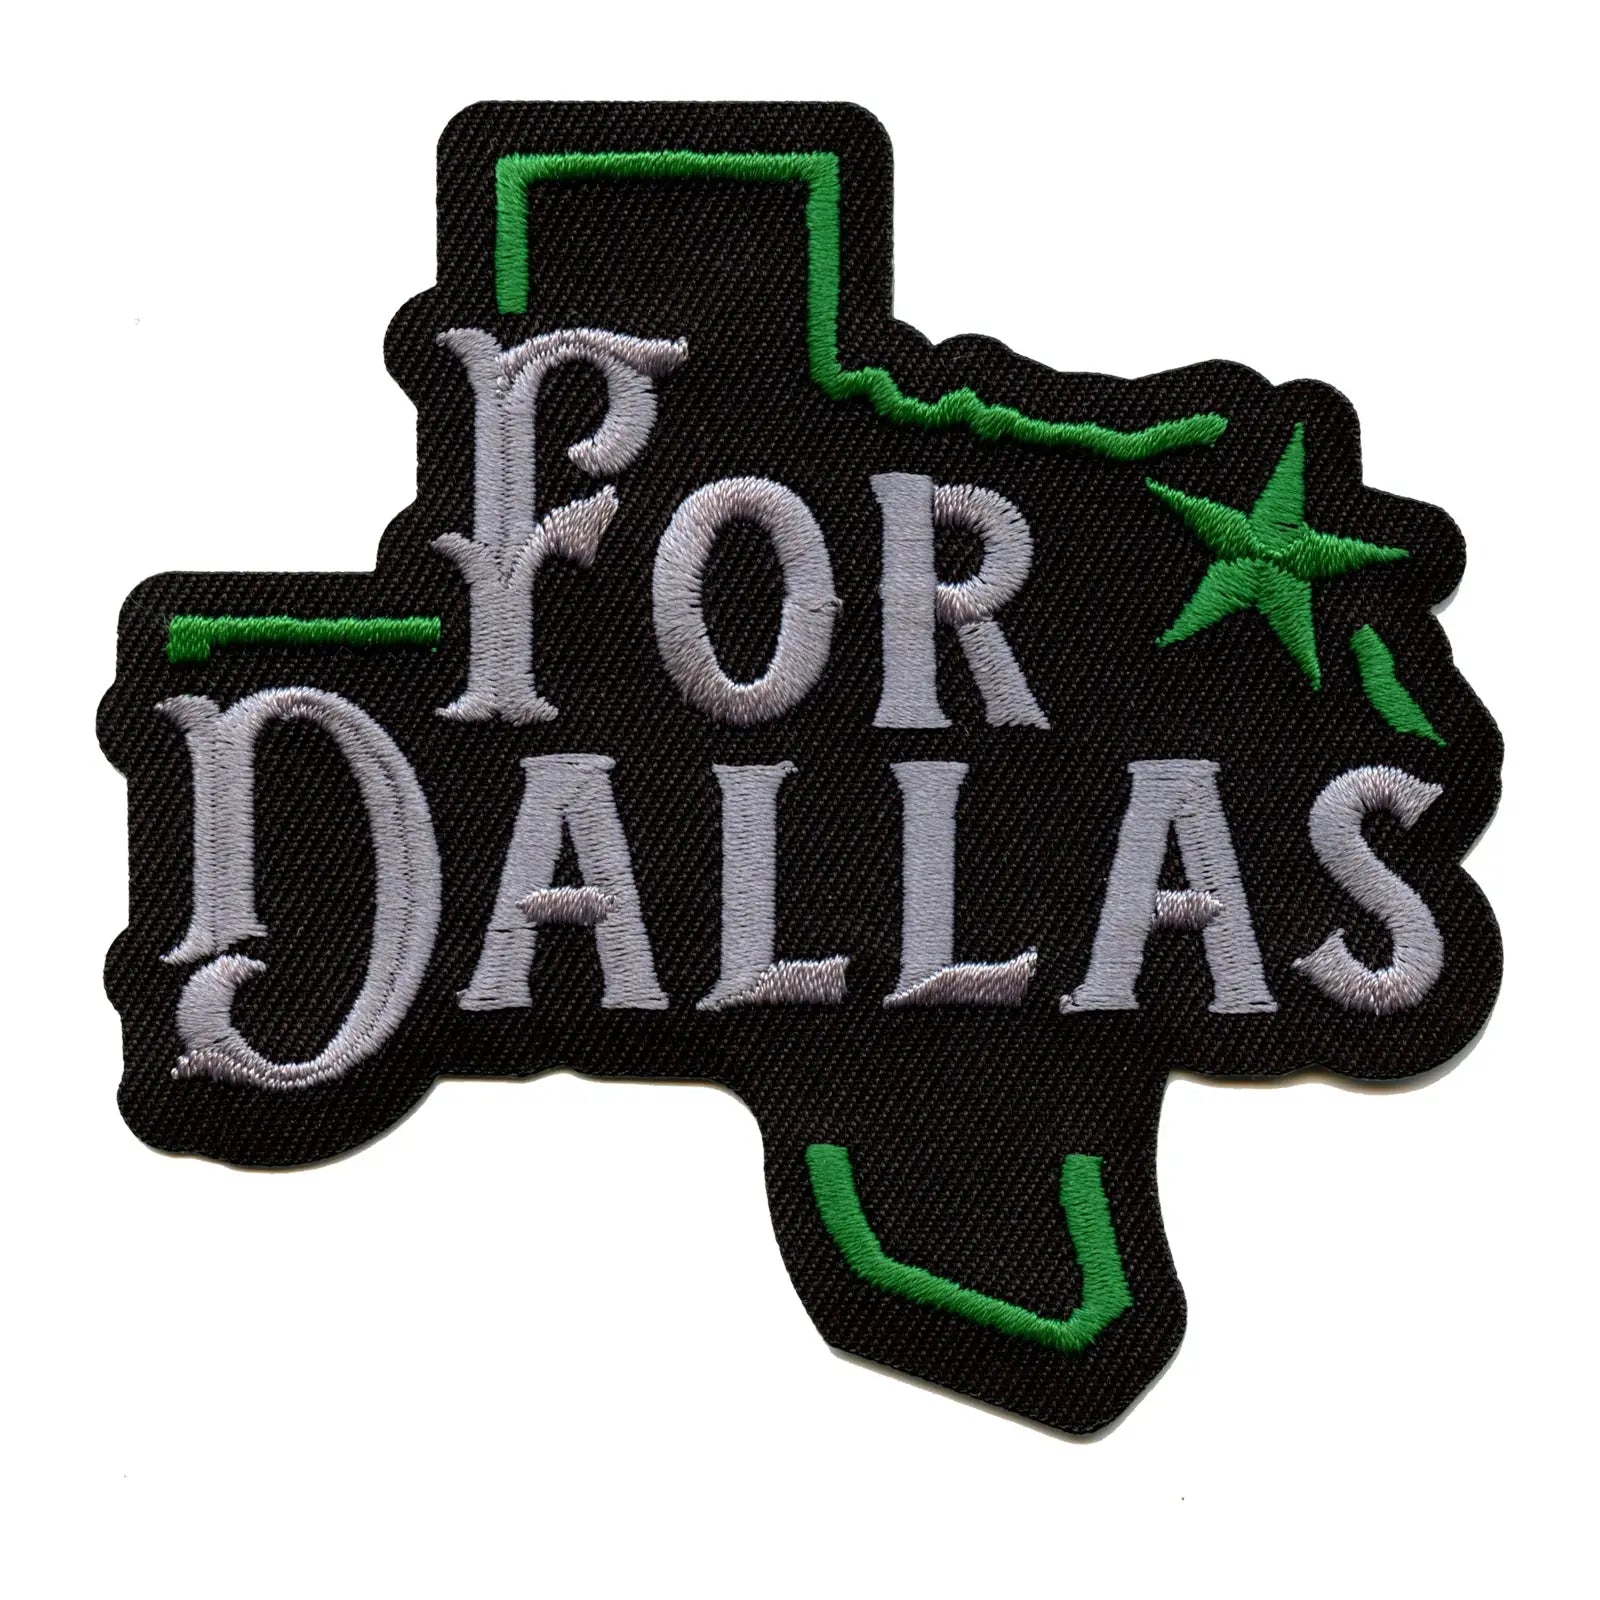 Dallas Cowboys Iron On patch NFL football team DIY